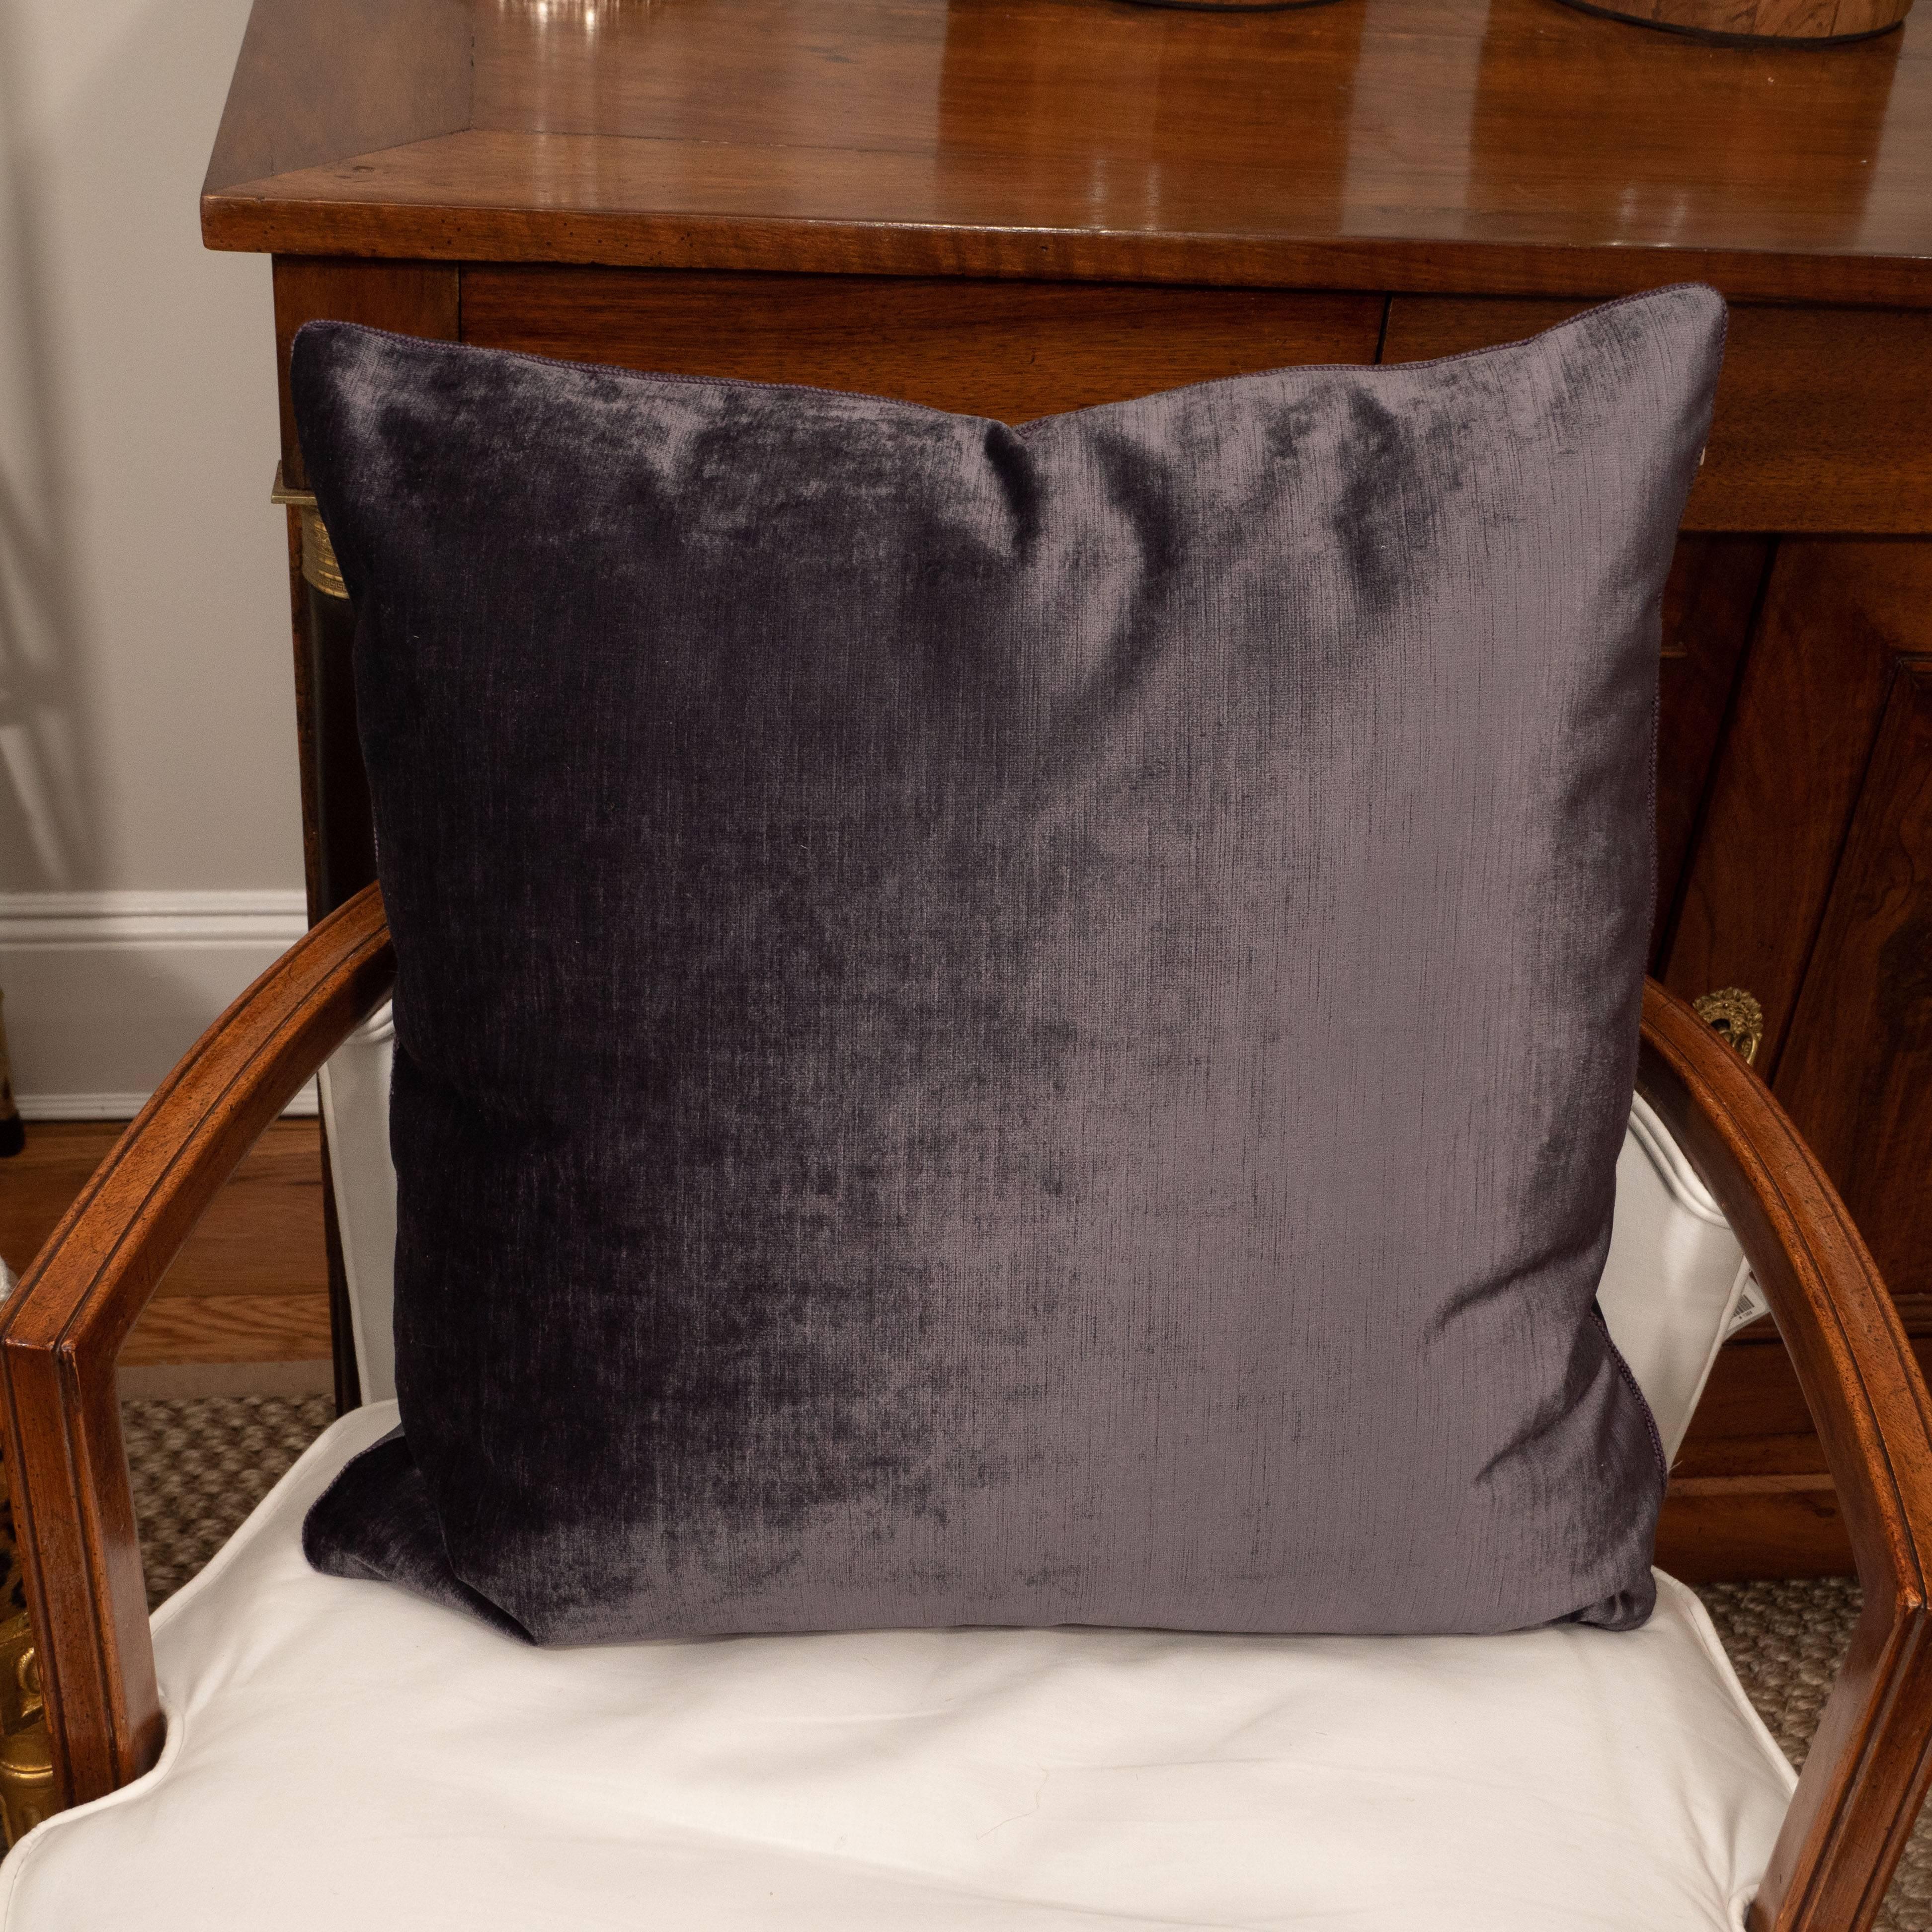 Deep purple velvet cushions with cording.